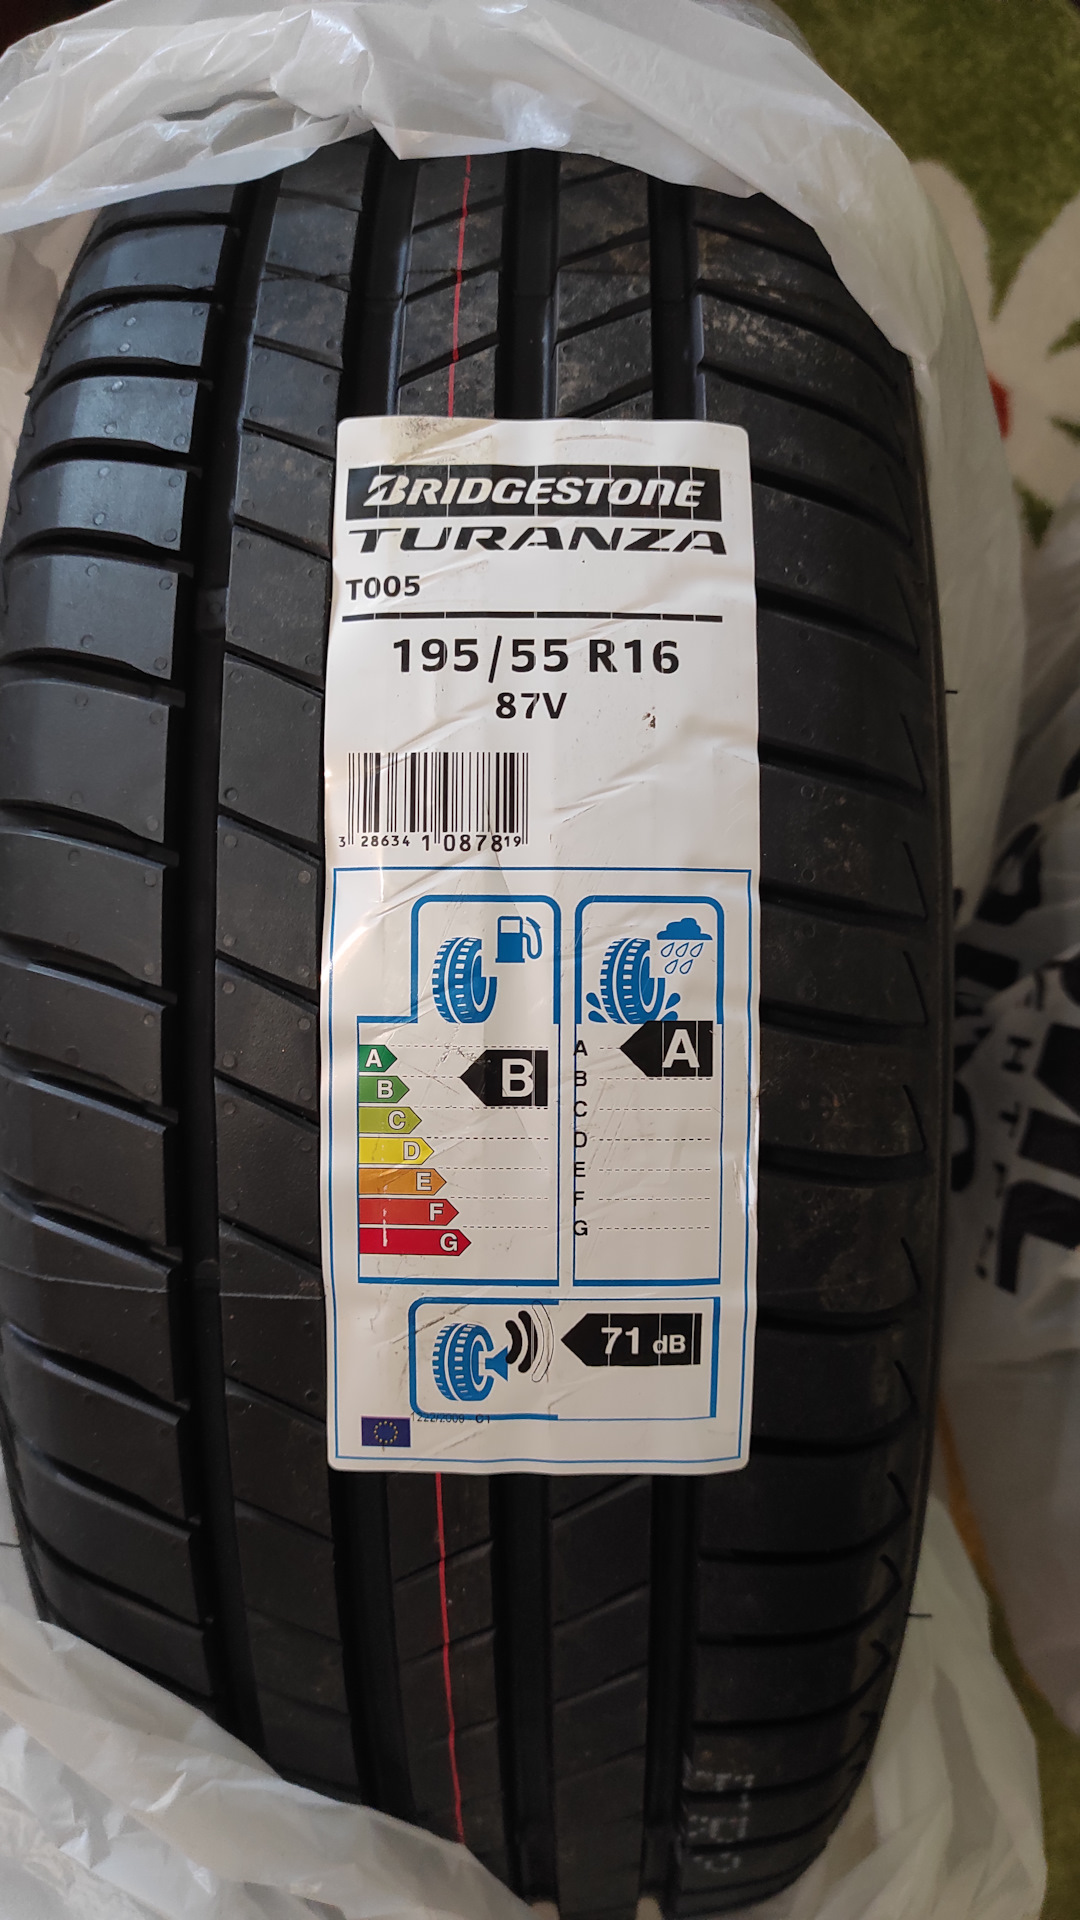 Bridgestone turanza t005 цены